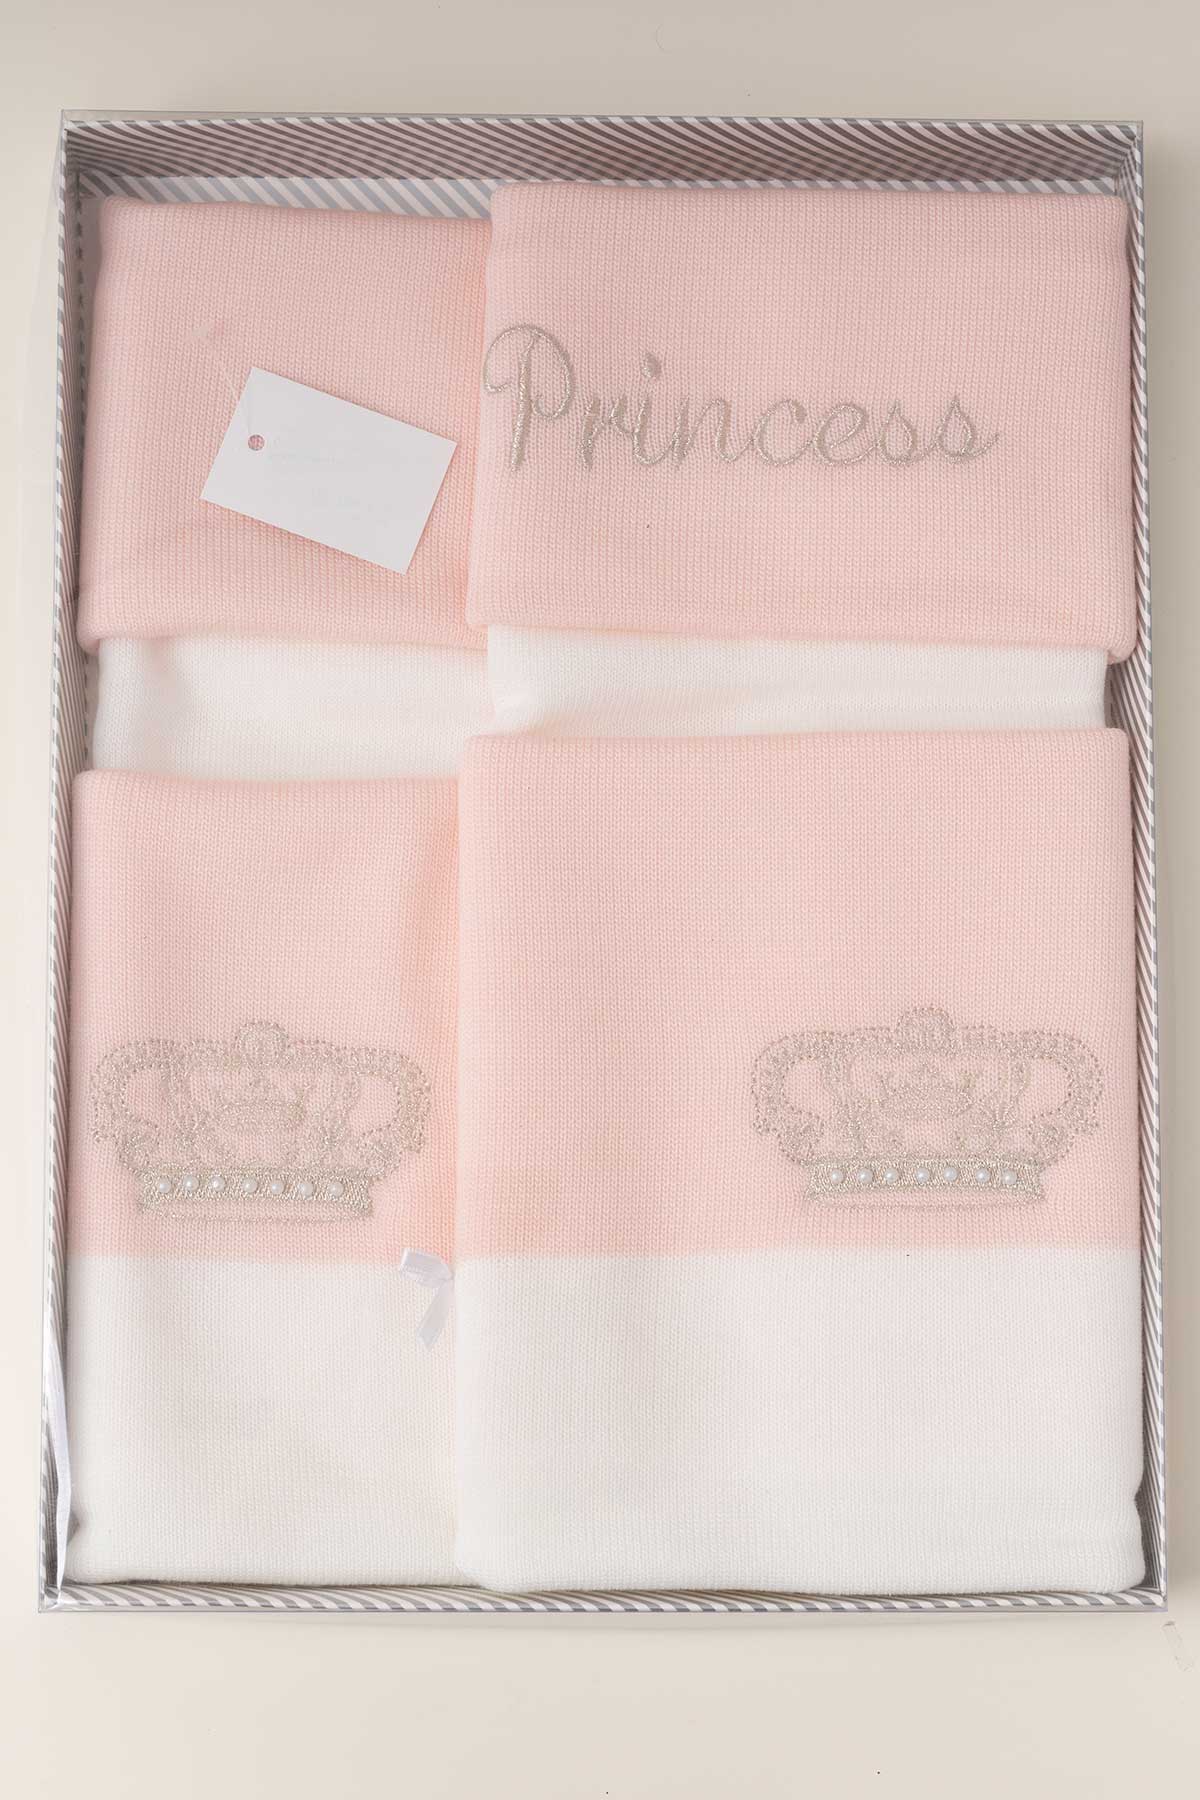 Princess Knitwear Baby Blanket